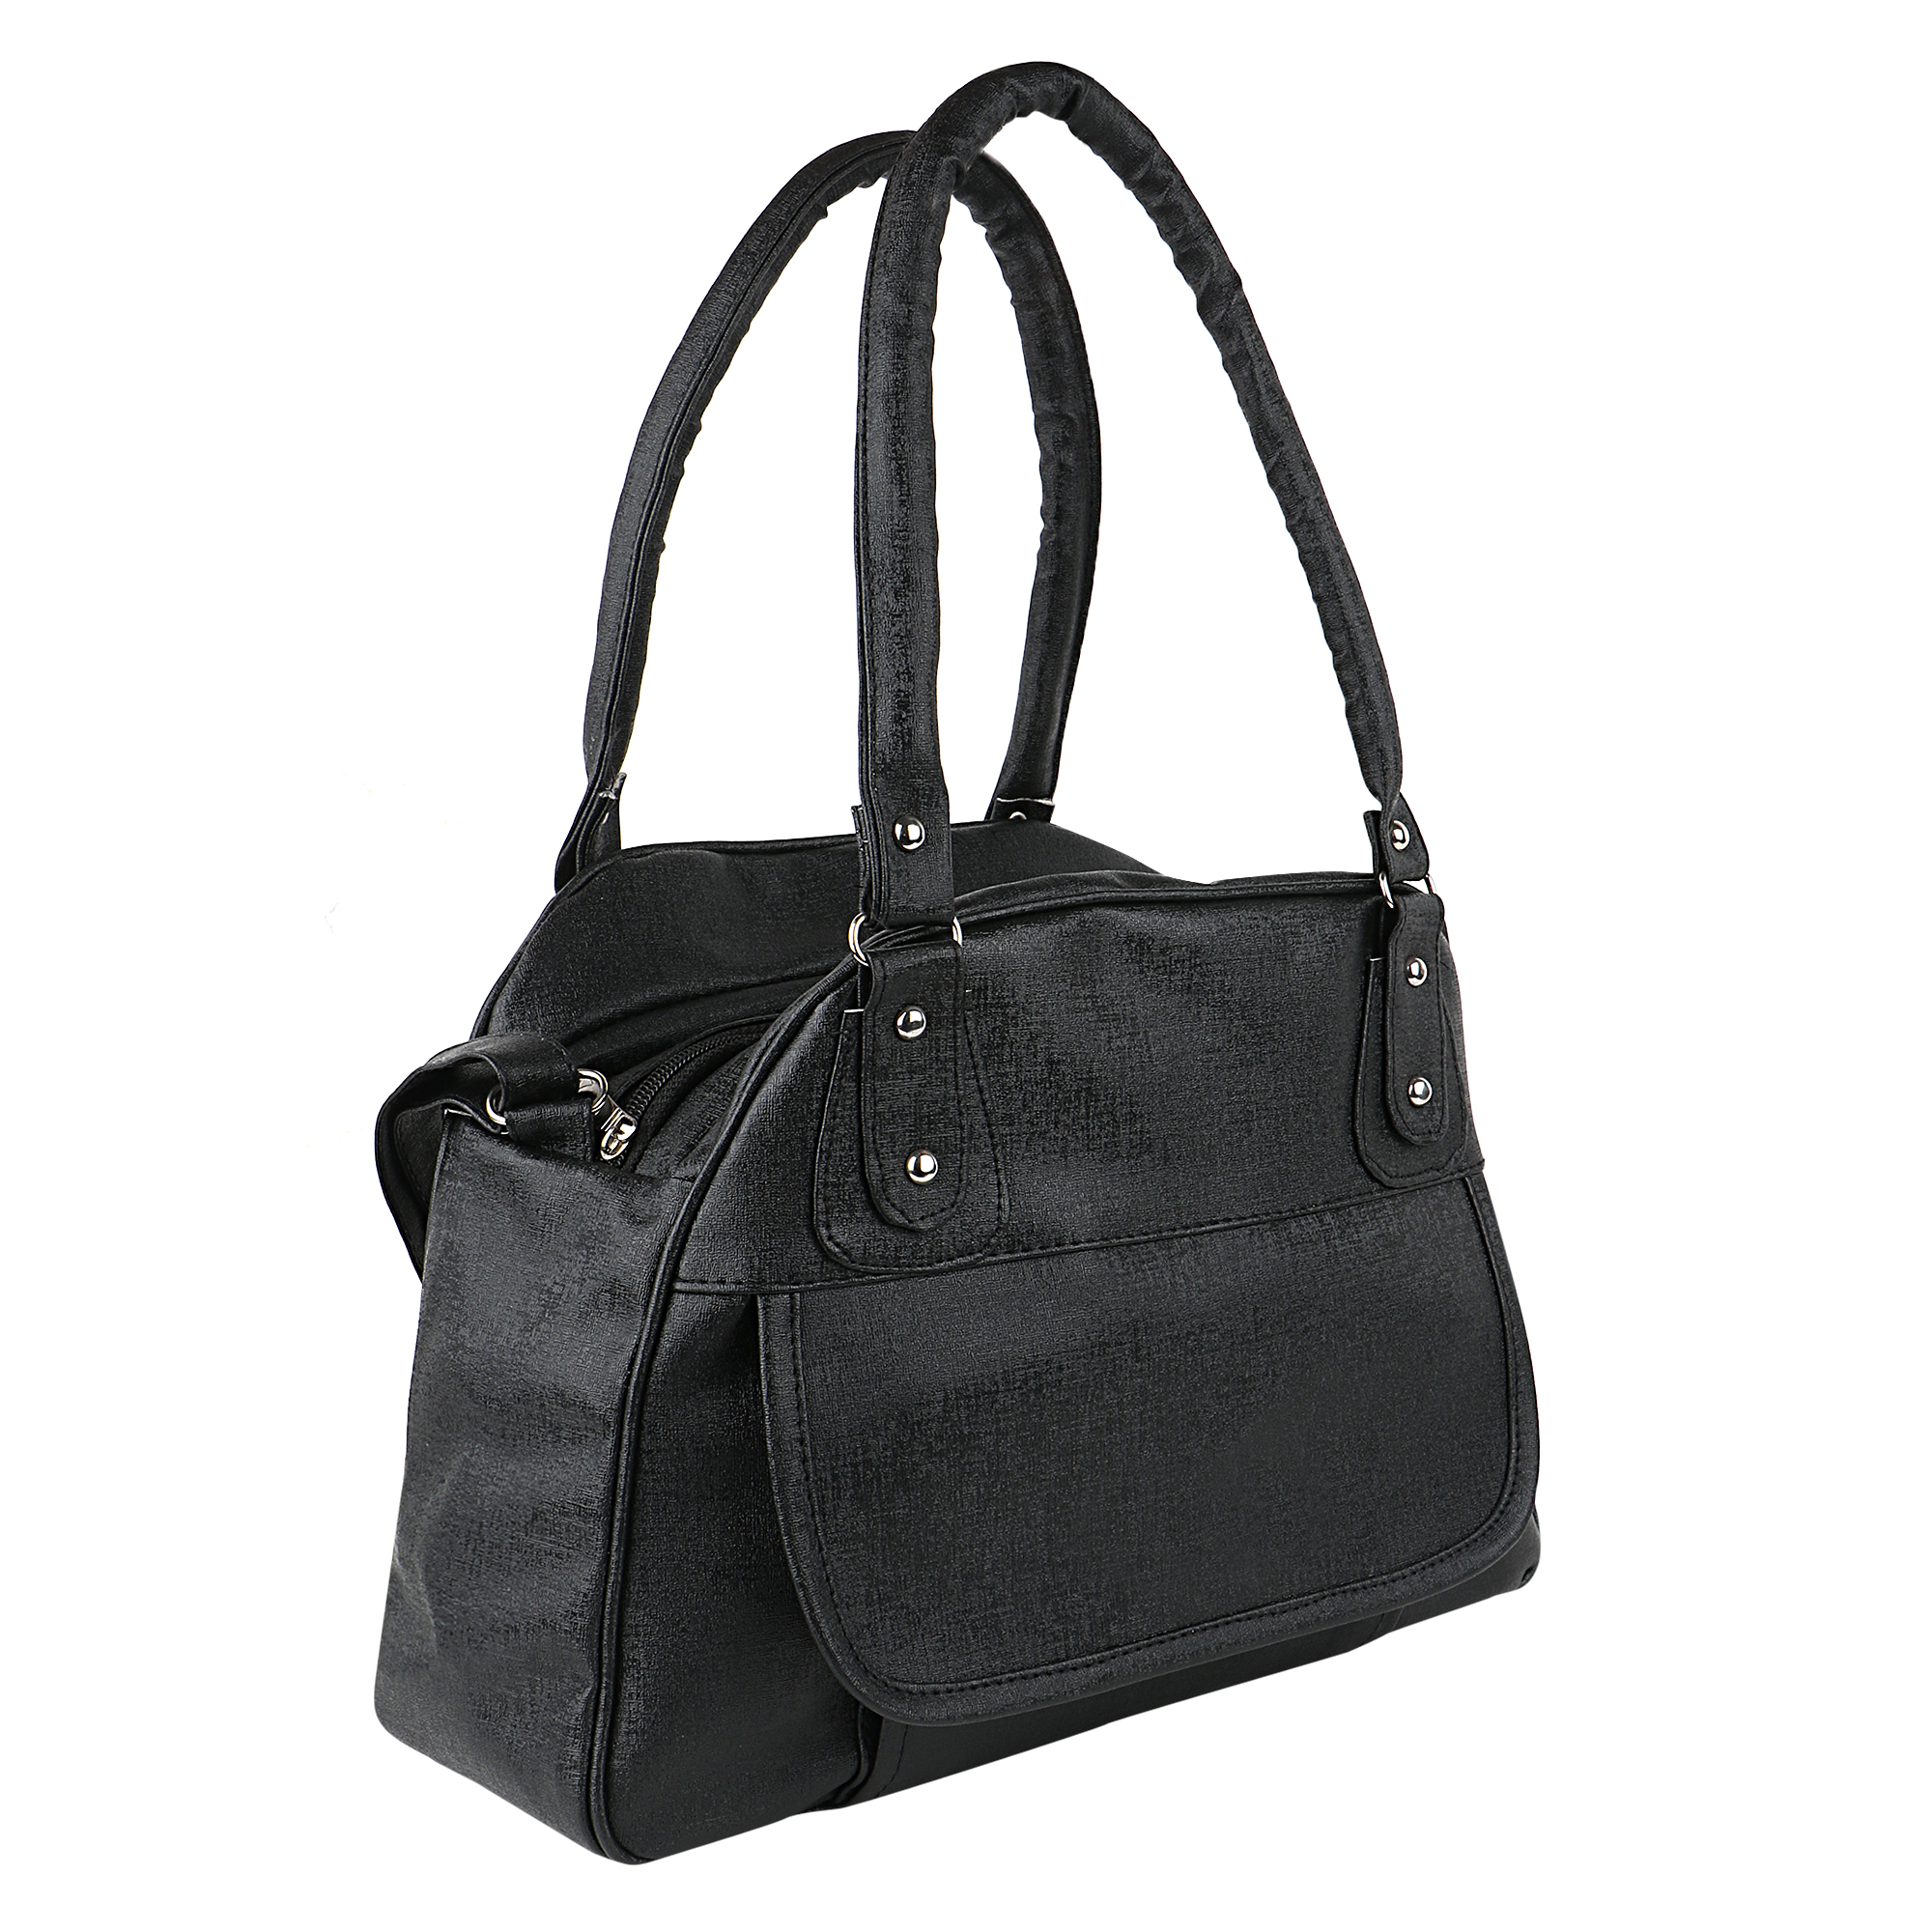 Buy sandy's handbag Online @ ₹449 from ShopClues